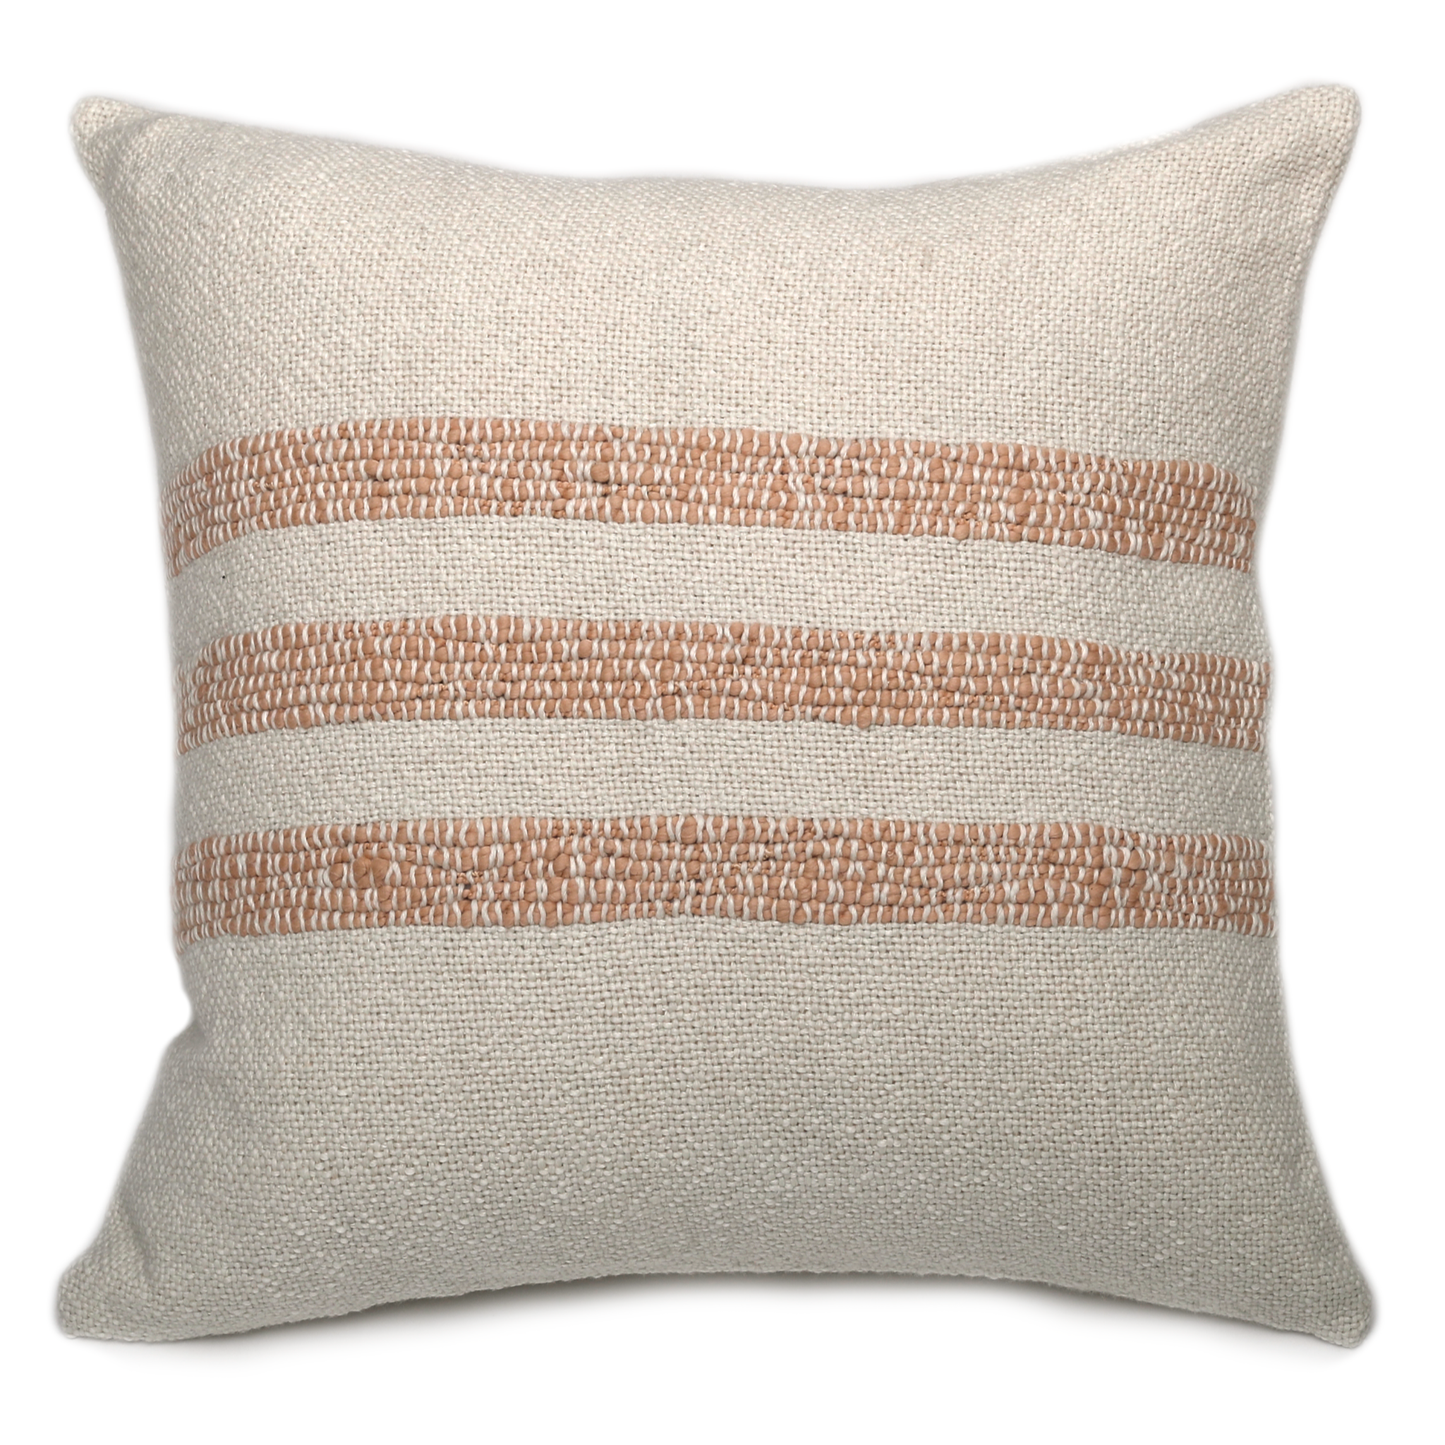 Intiearth_Caral_collection_Ecru_light terrecota_stripe_decorative_square_pillow_cotton